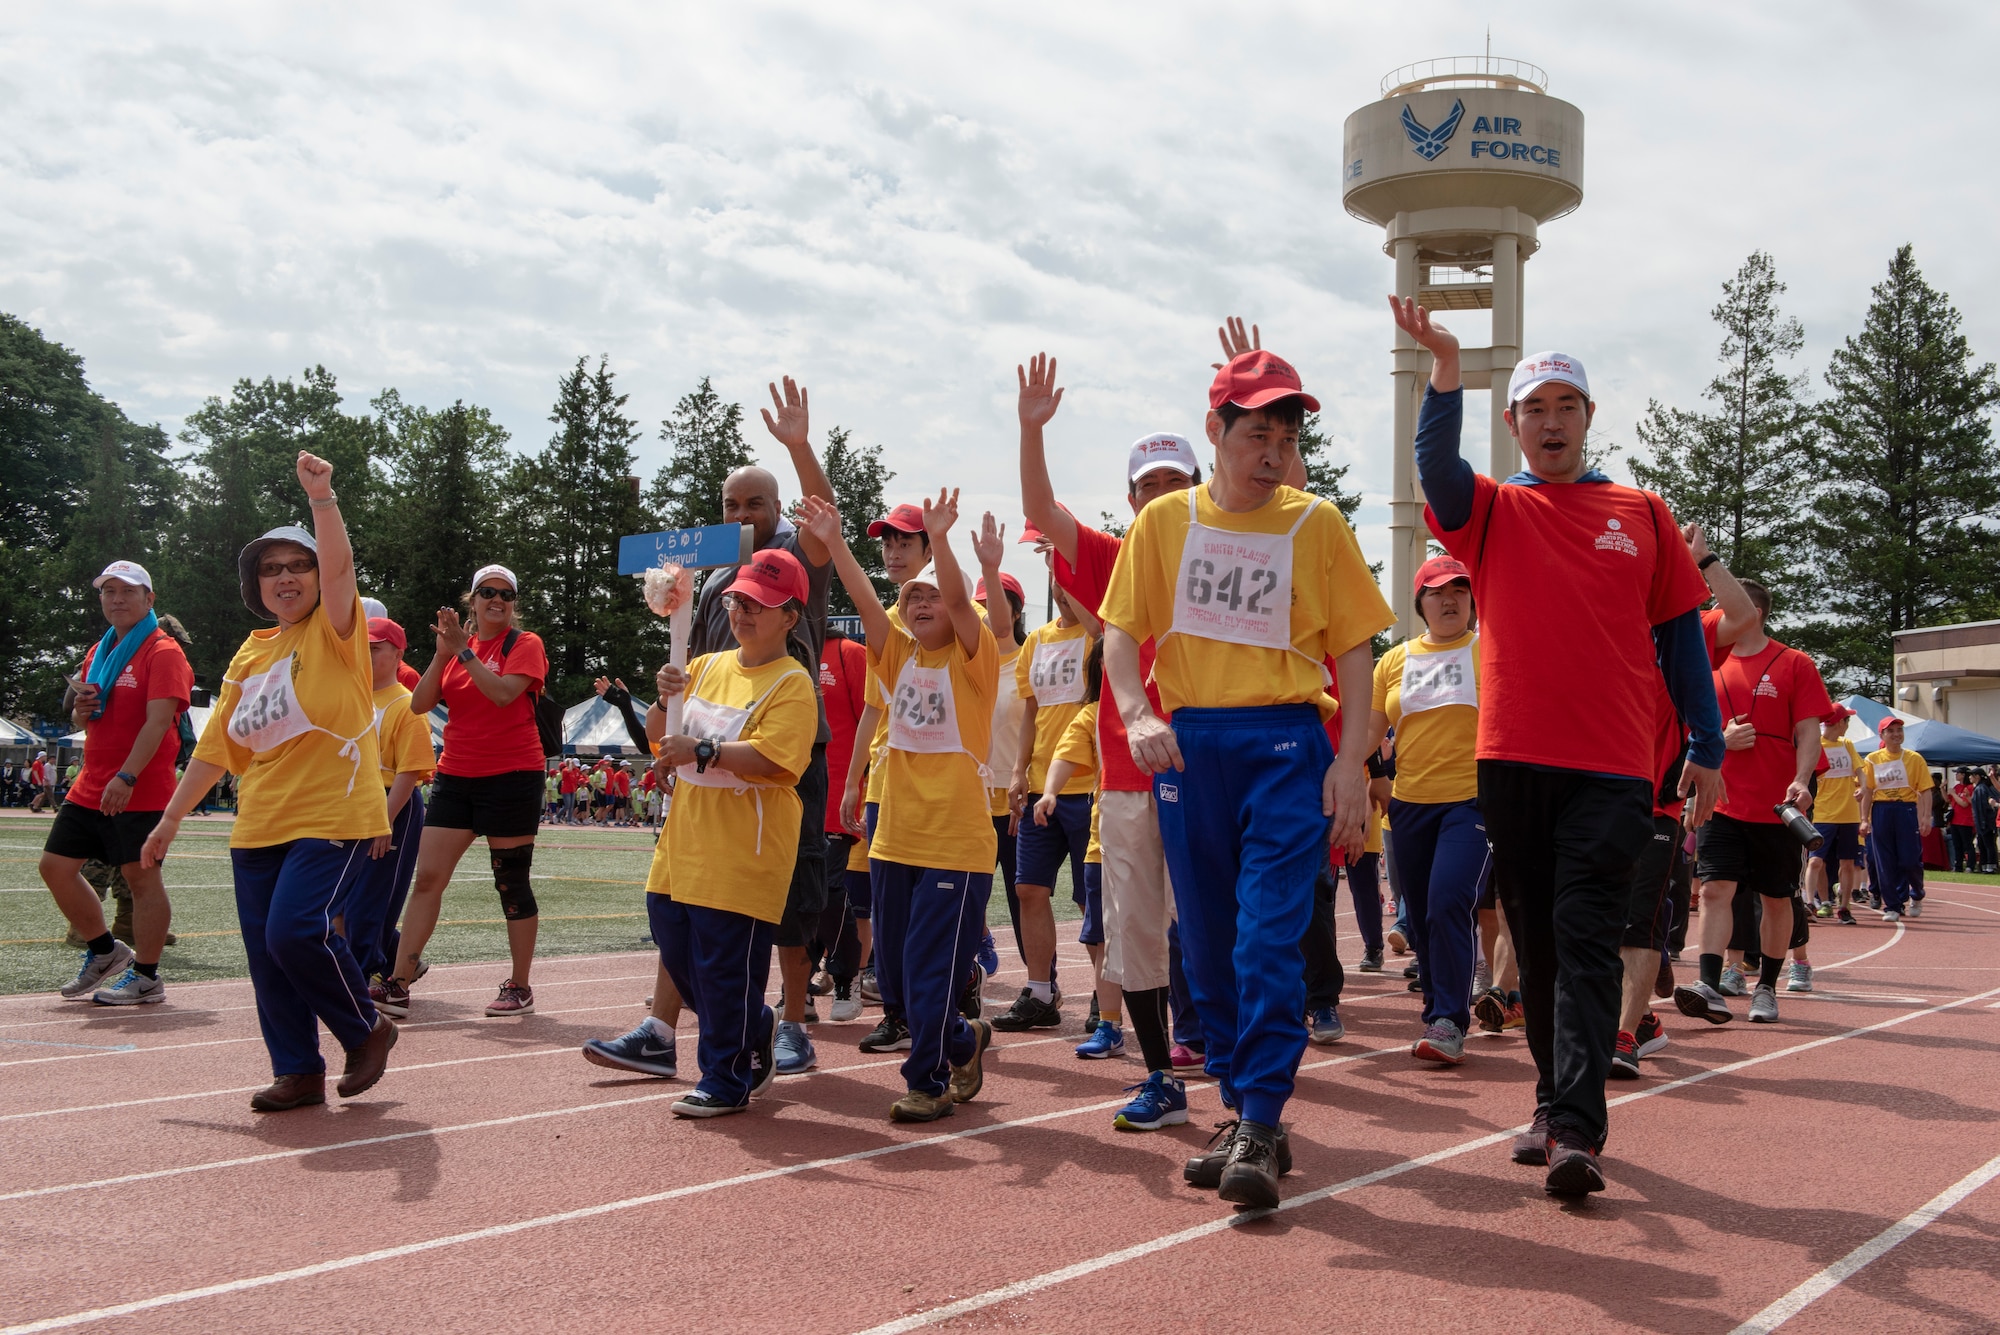 The athletes representing Shirayuri wave to the crowd during the opening parade of the Kanto Plains Special Olympics at Yokota Air Base, Japan, May 19, 2018.